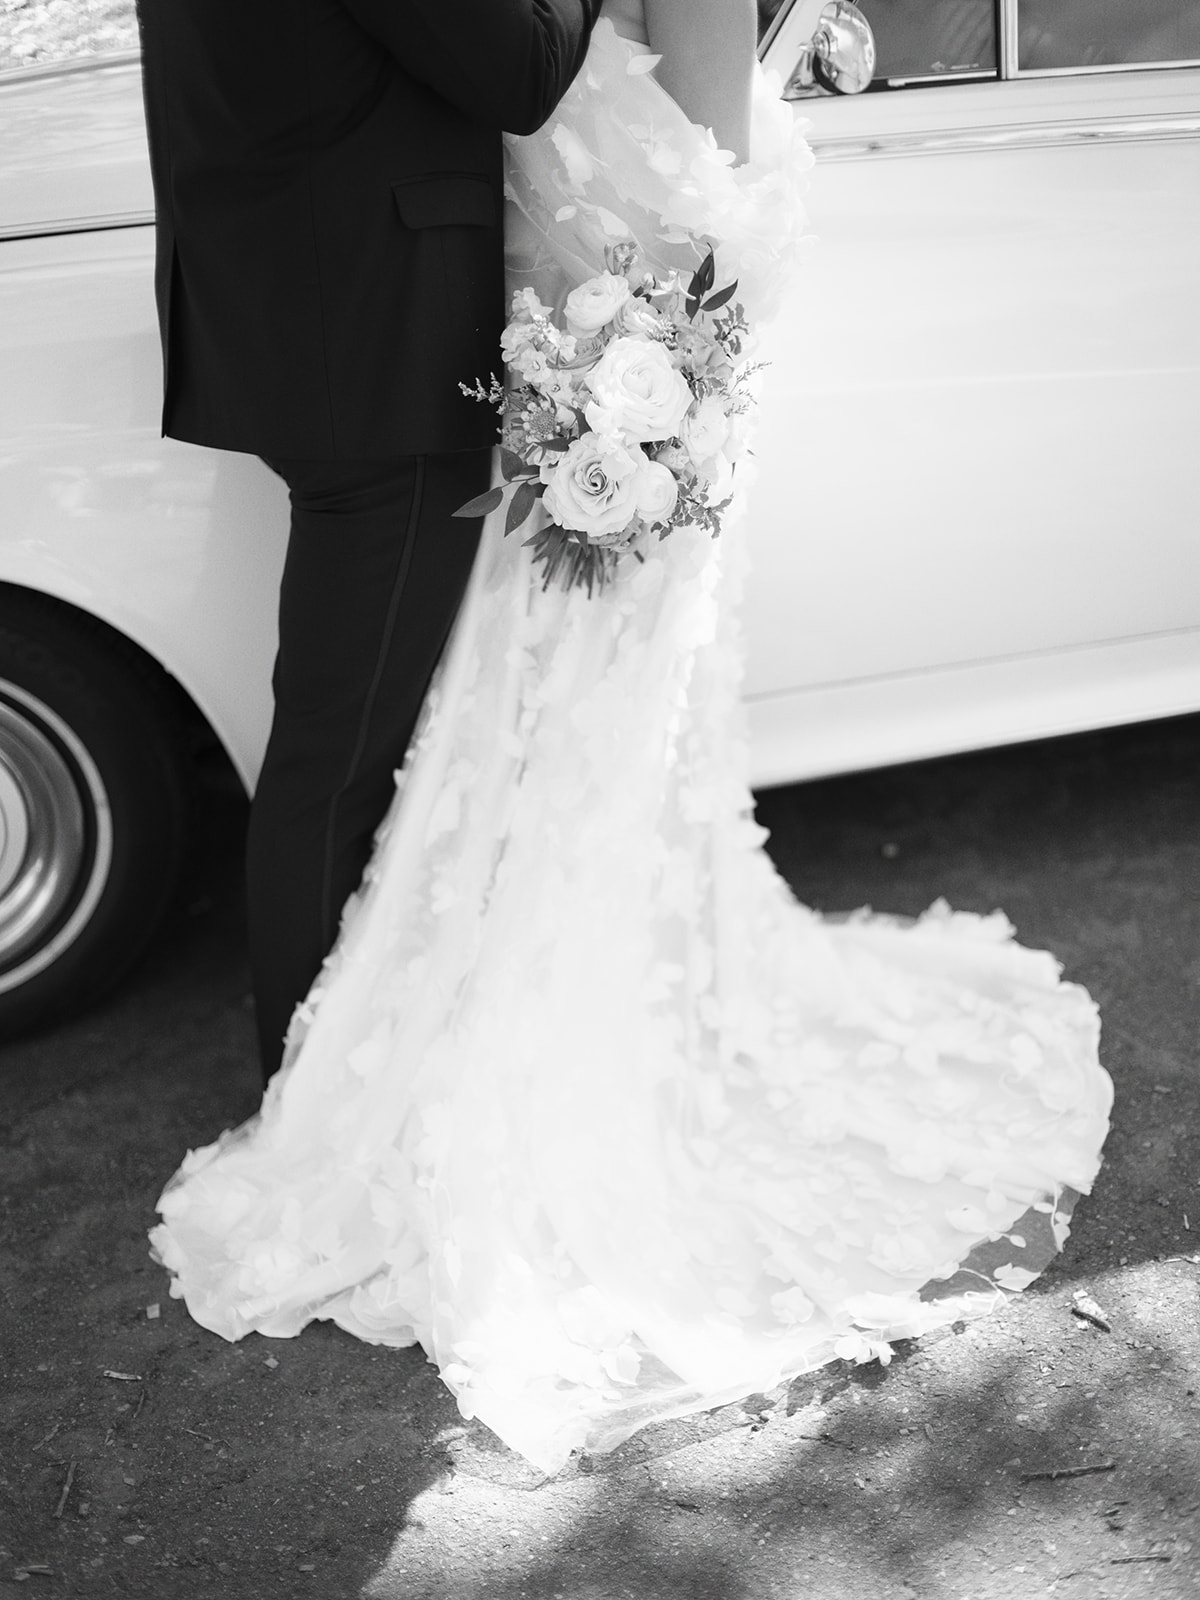 Clair de Lune wedding dress in front of classic Rolls-royce car